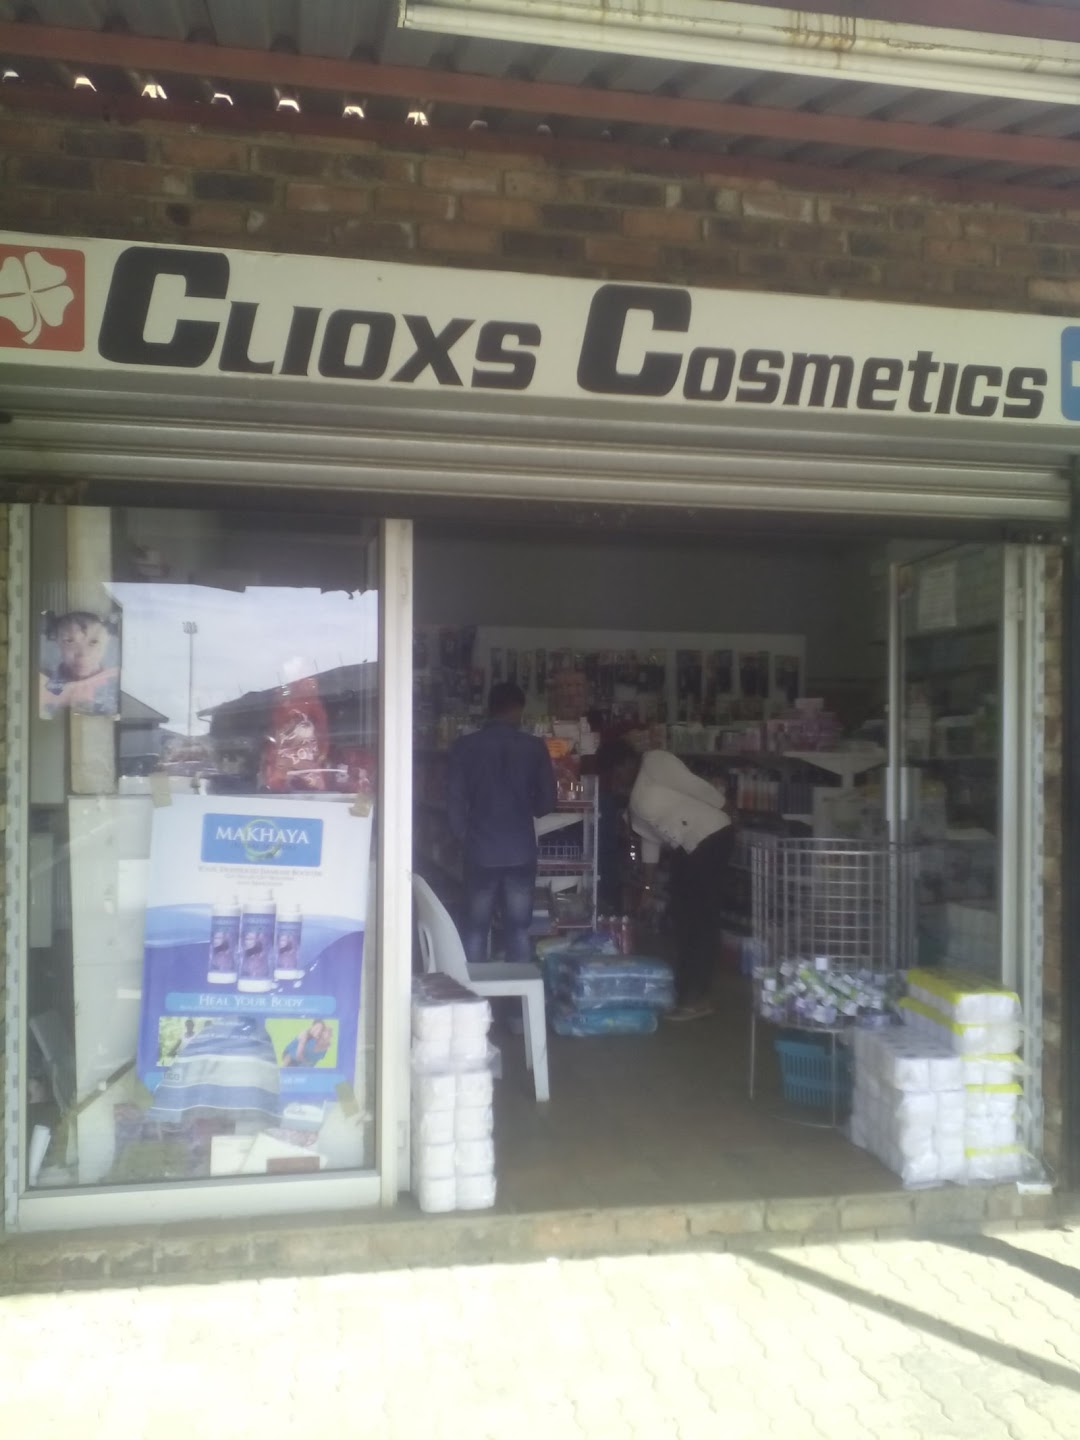 Clioxs Cosmetics